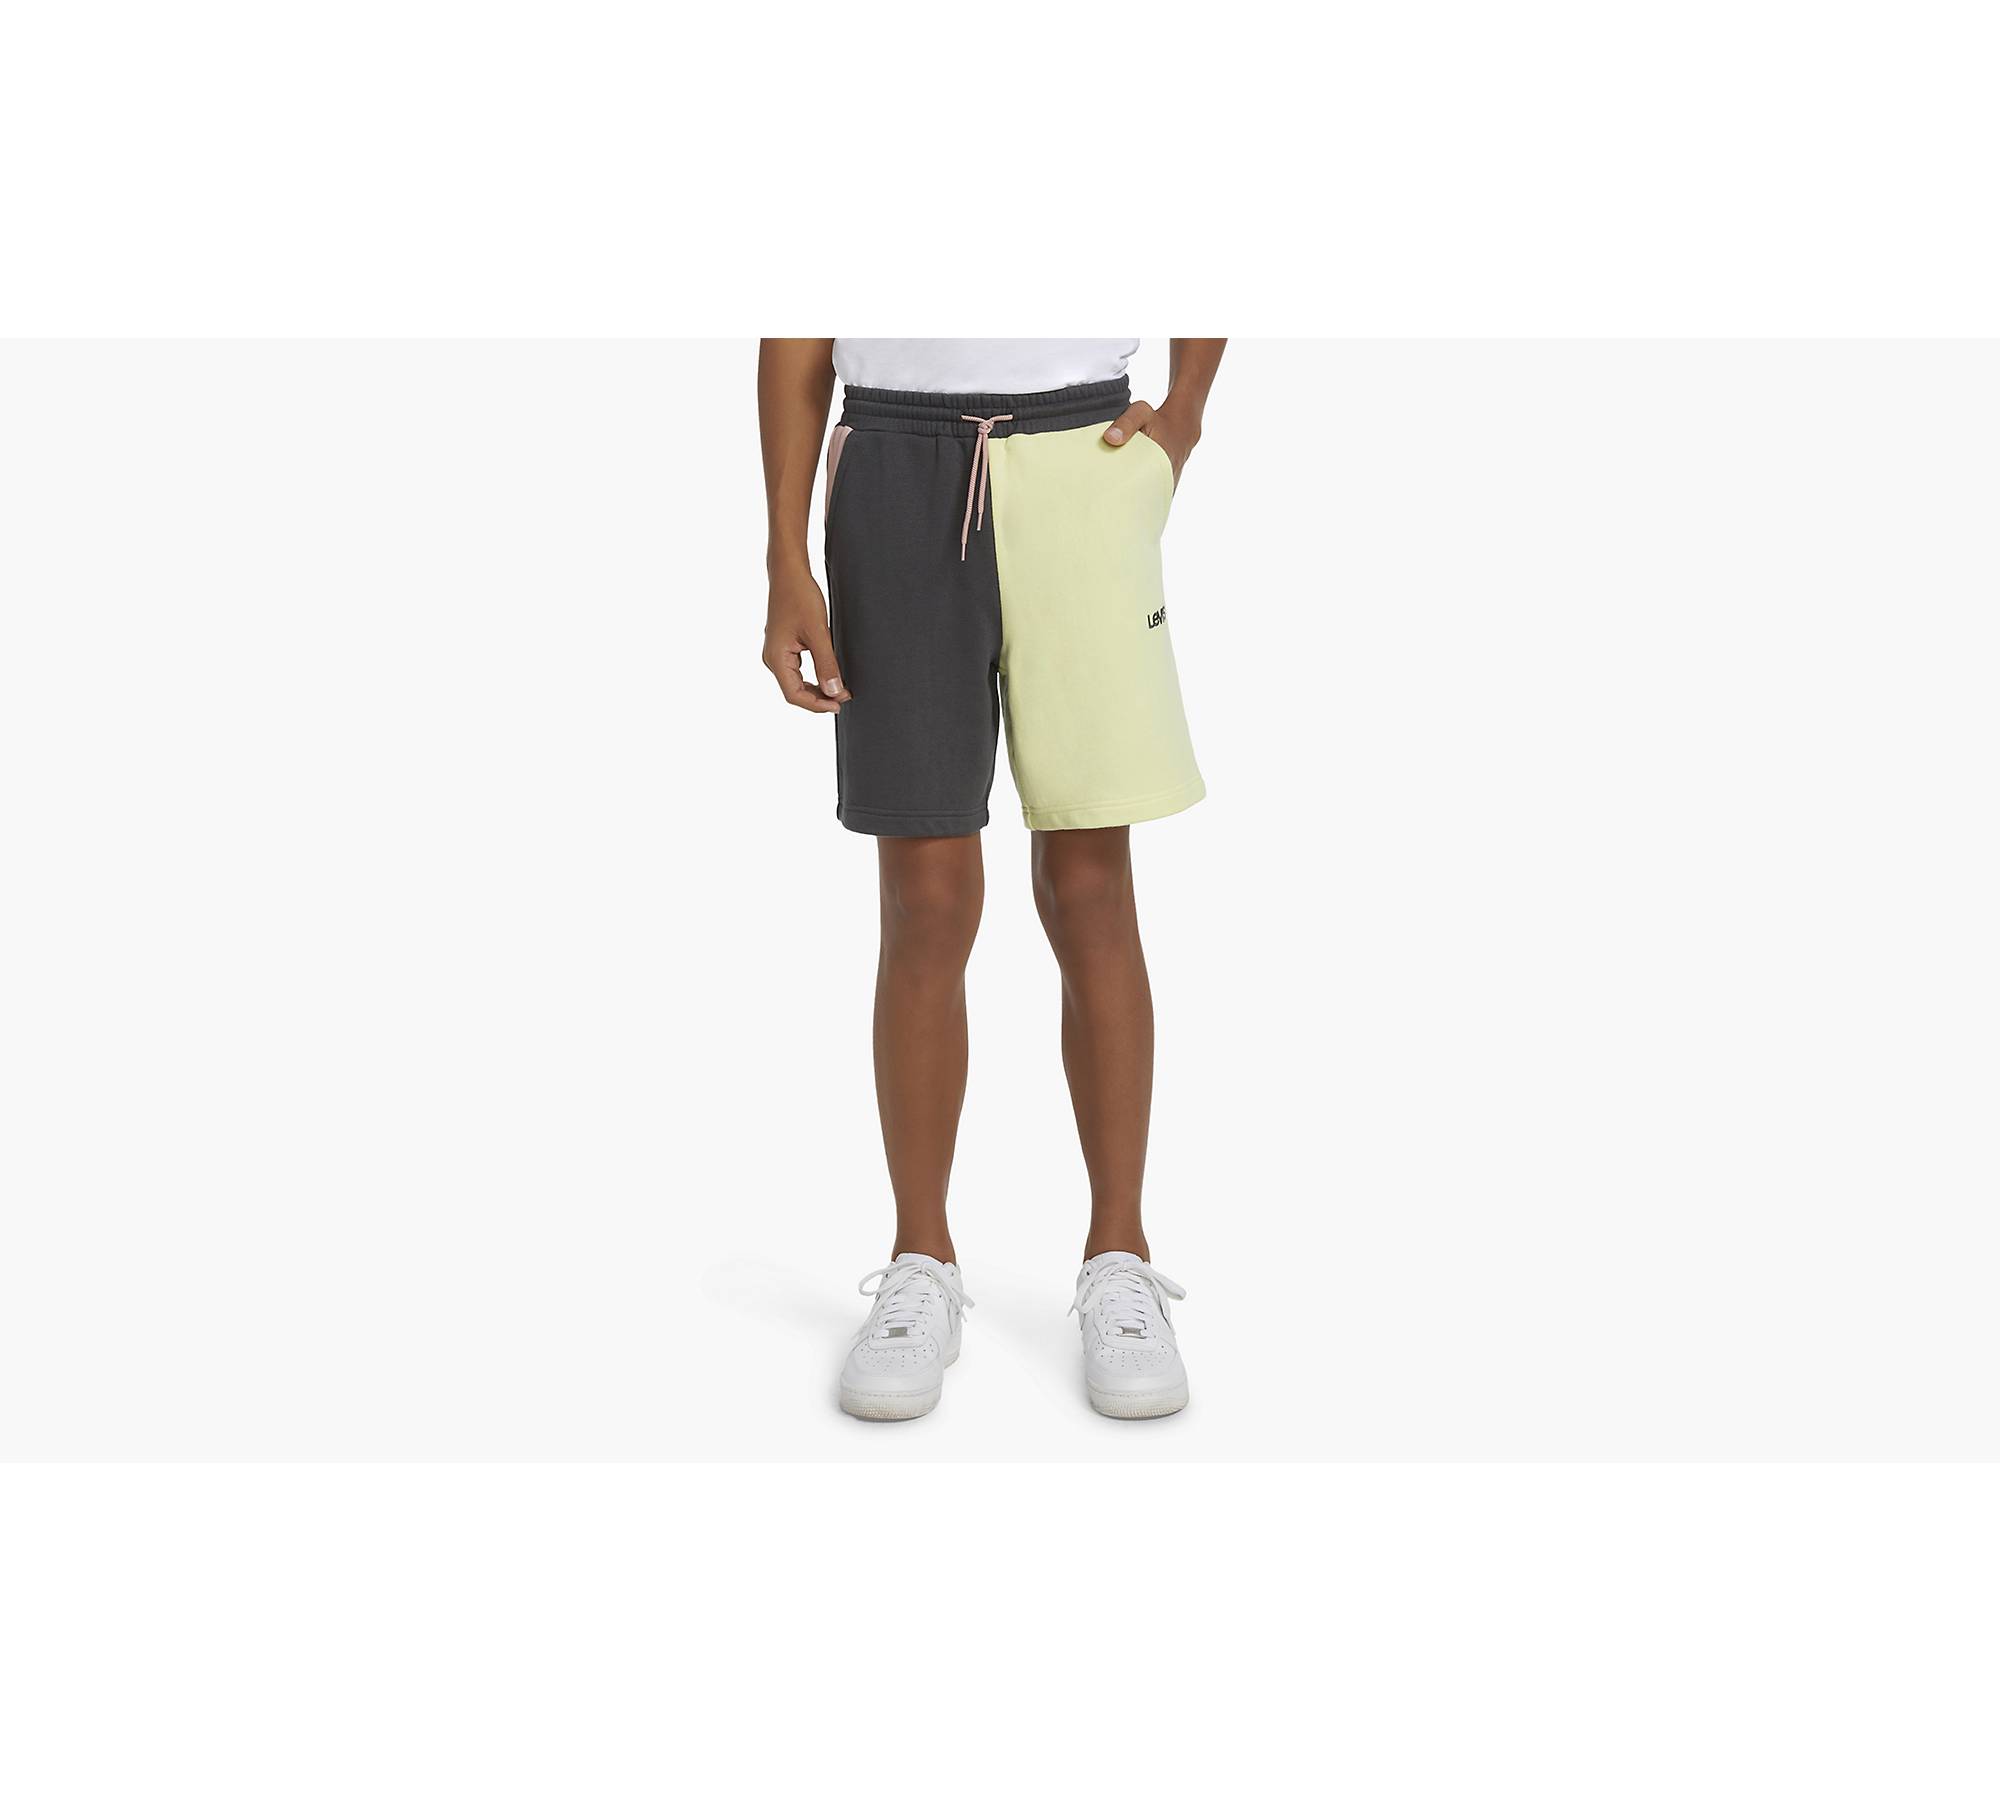 Colorblocked Jogger Shorts Big Boys S-XL 1